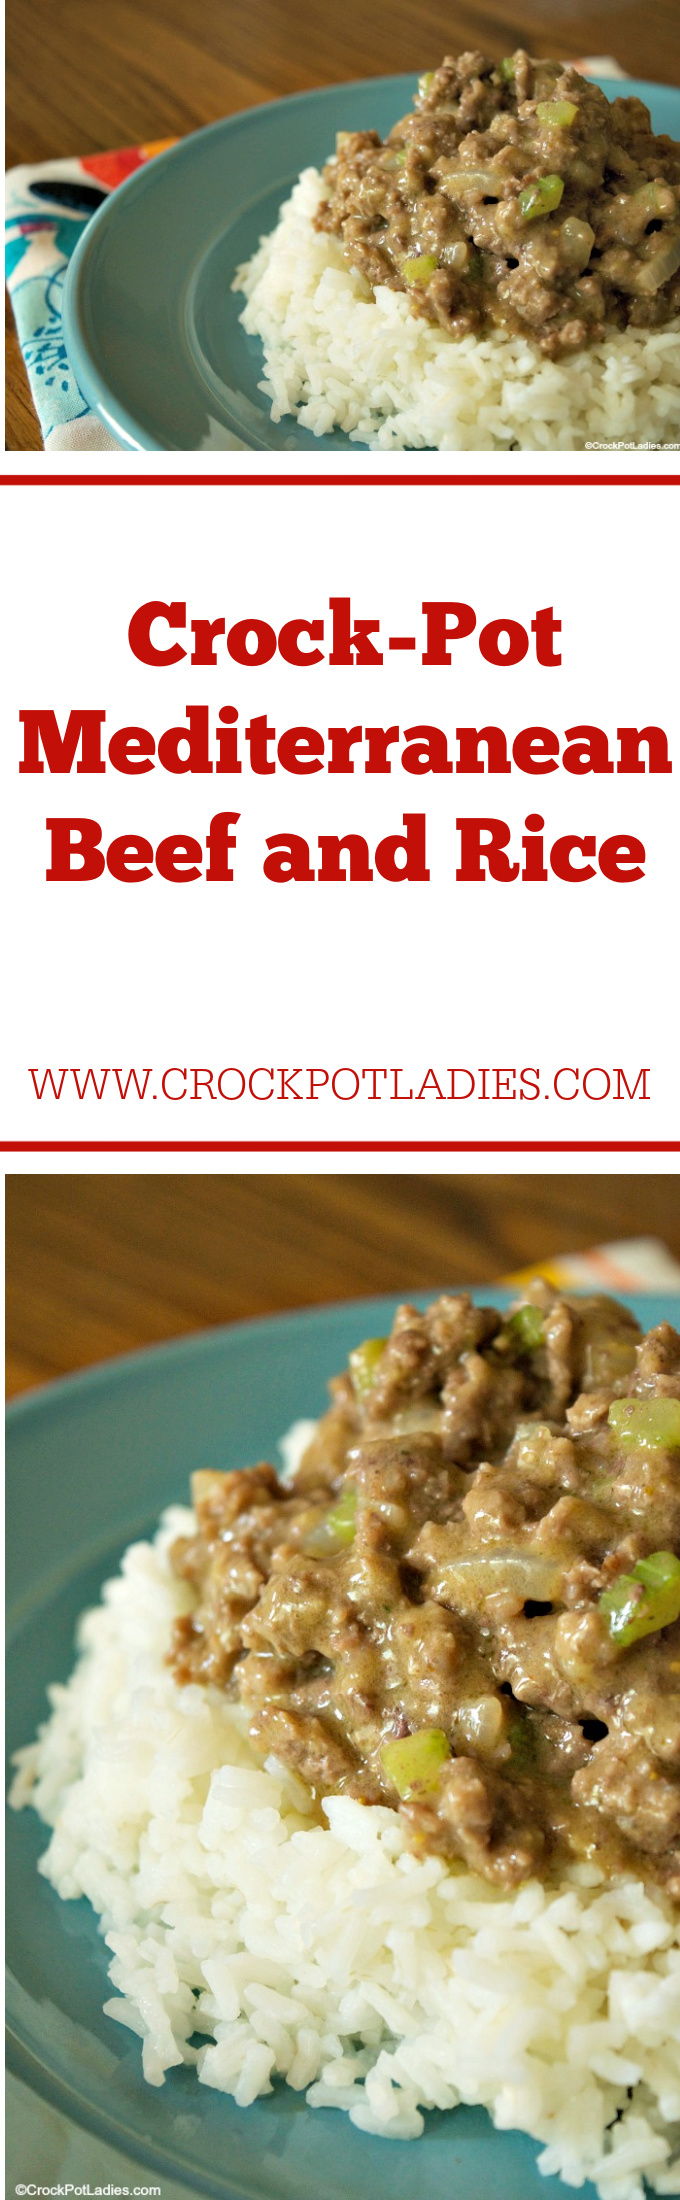 Crock-Pot Mediterranean Beef and Rice